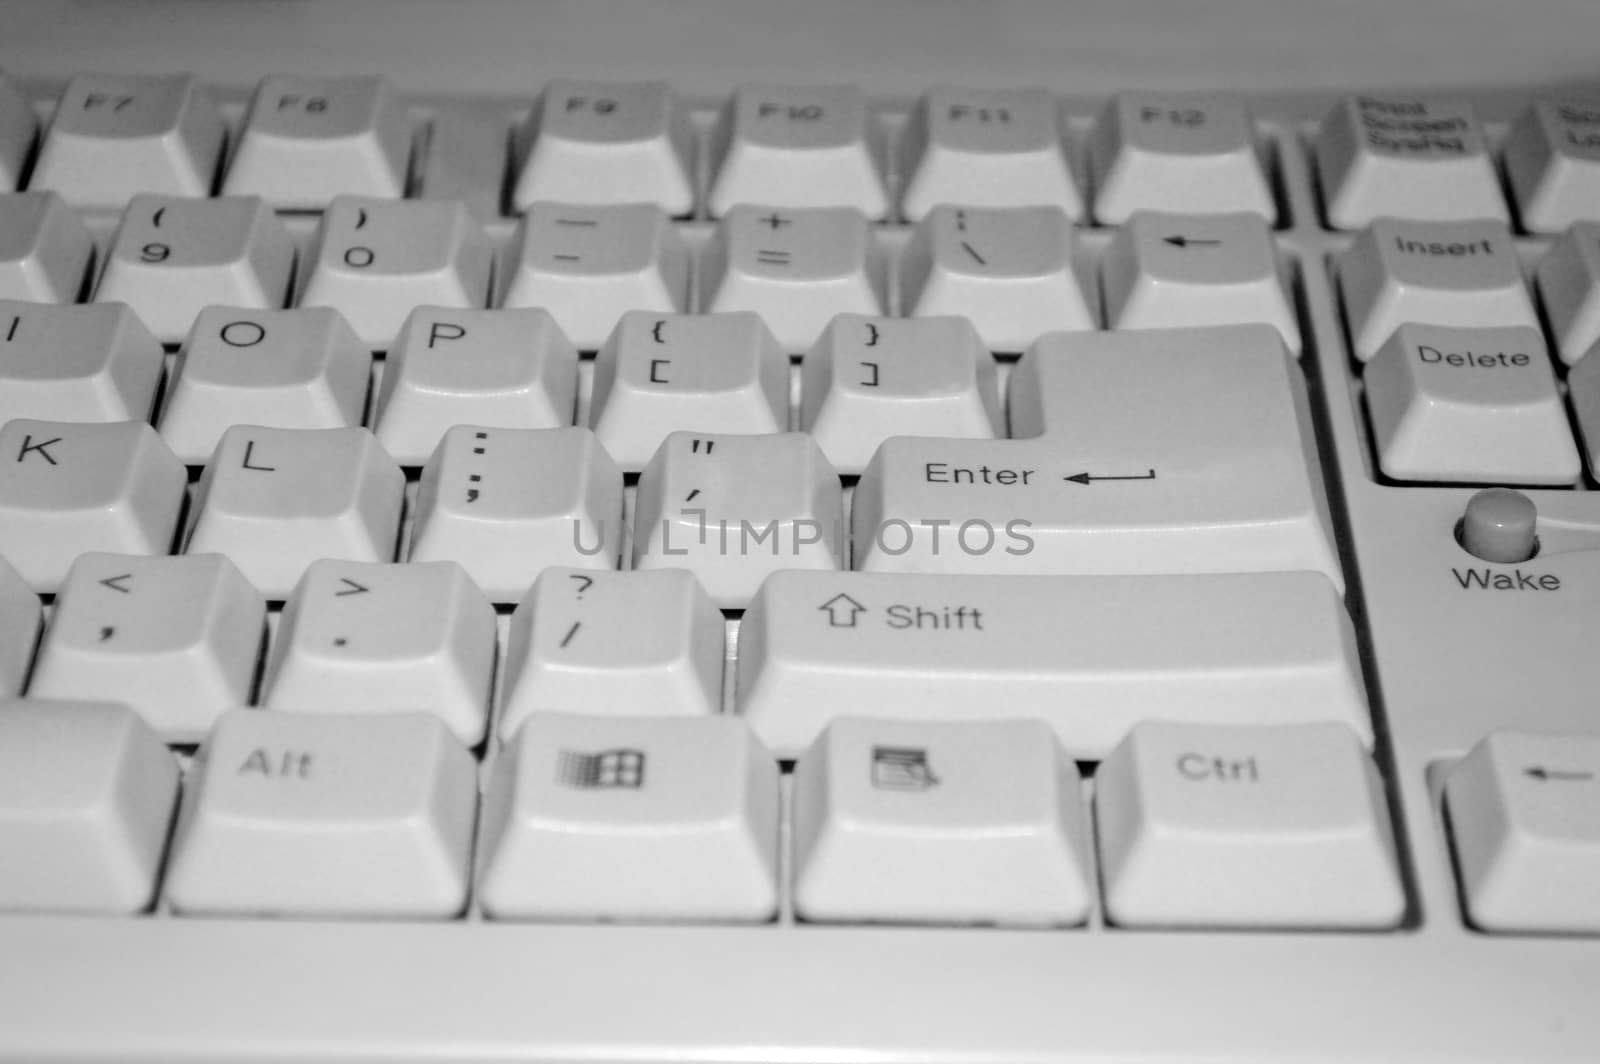 monochrome picture of computer keyboard keys